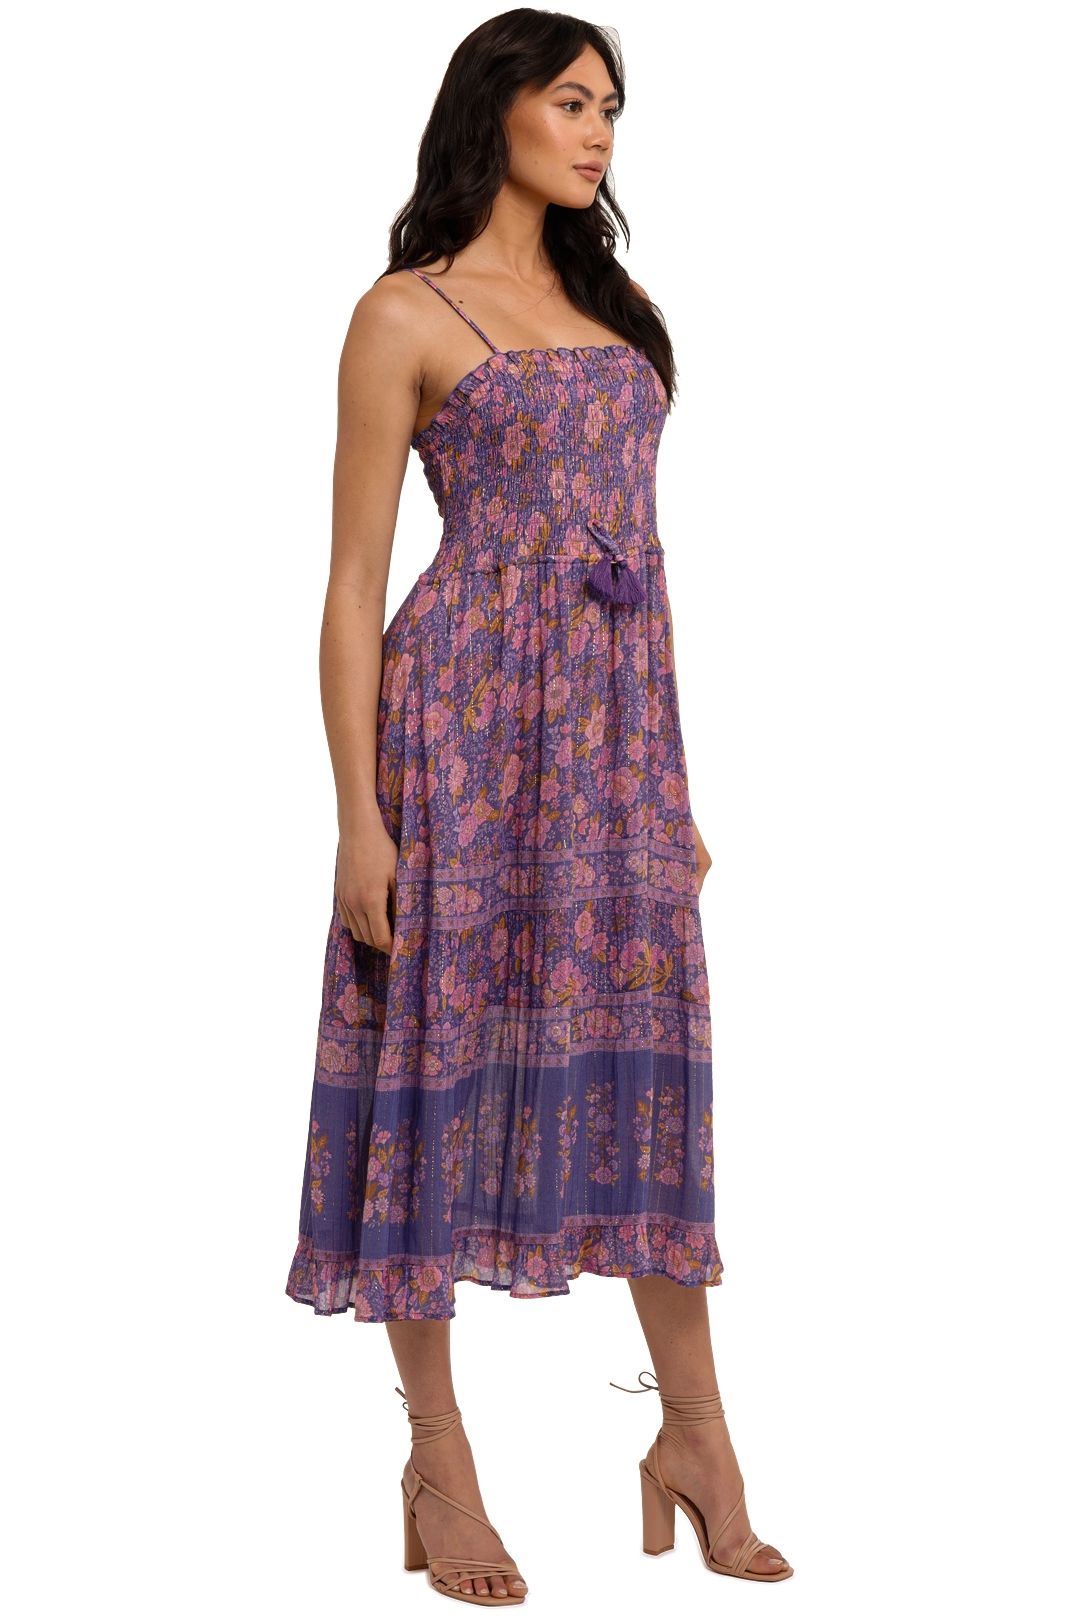 Spell Juniper Shirred Strappy Dress Violet Purple Floral